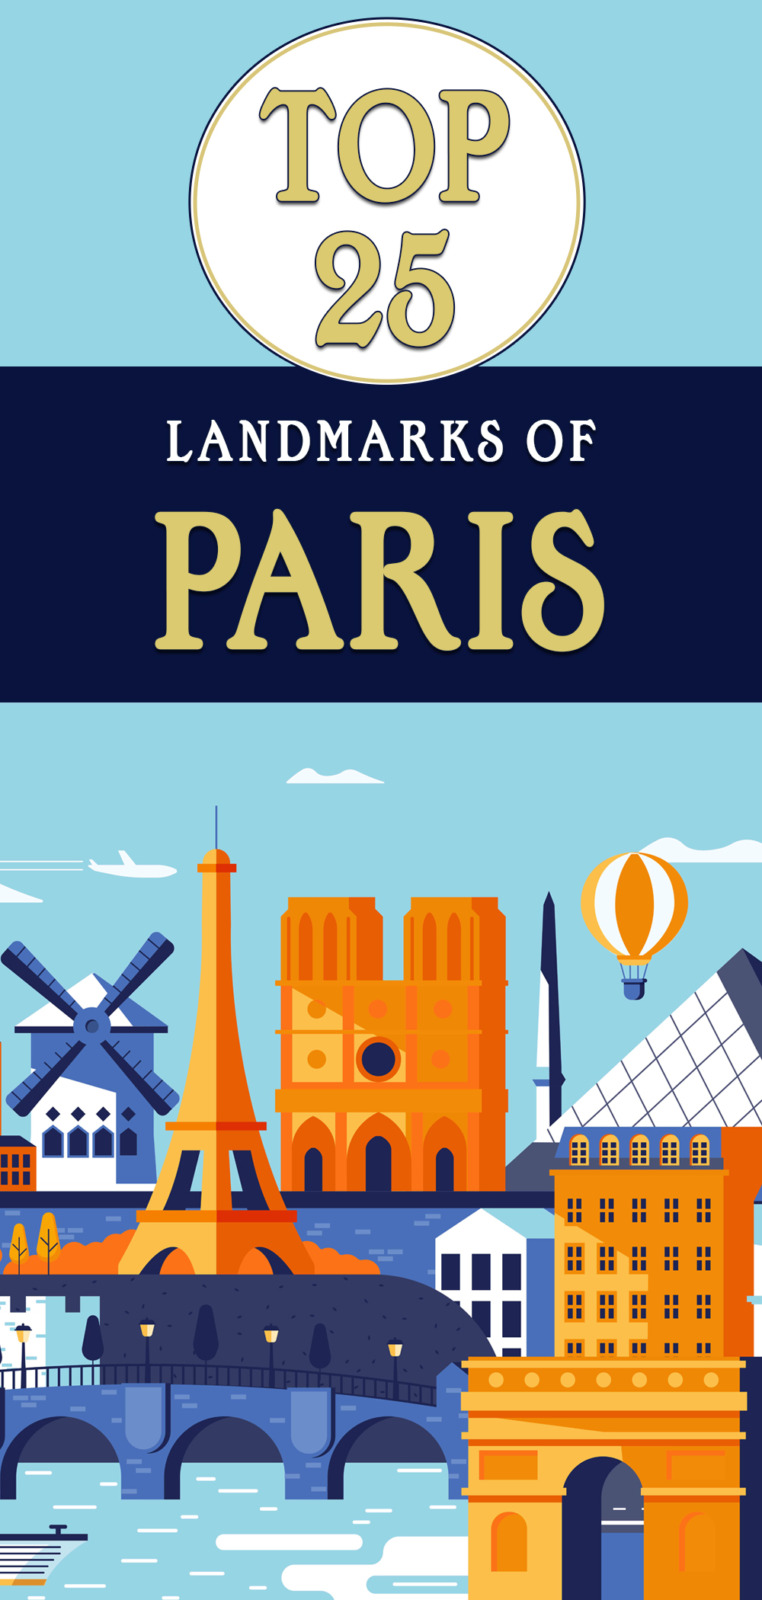 Landmarks of Paris for Pinterest. Design by graphics4u